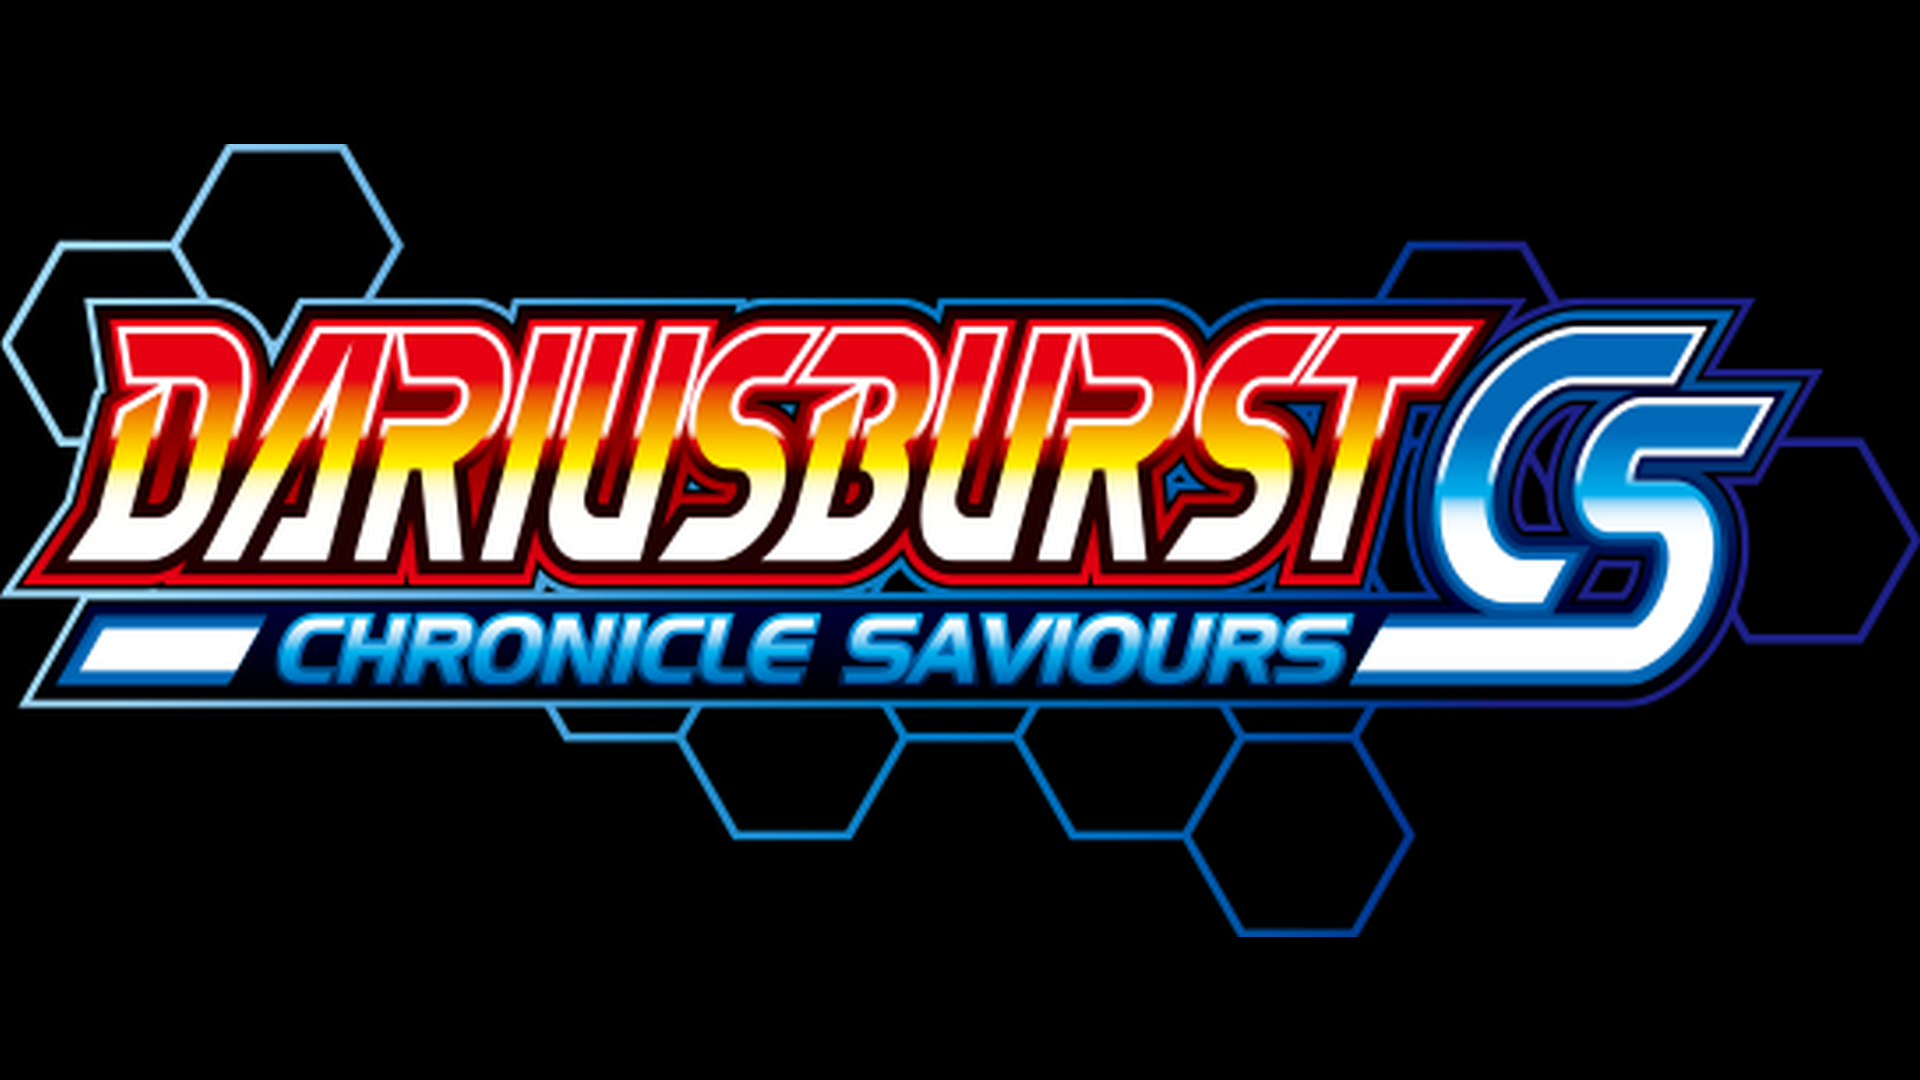 DARIUSBURST Chronicle Saviours Logo